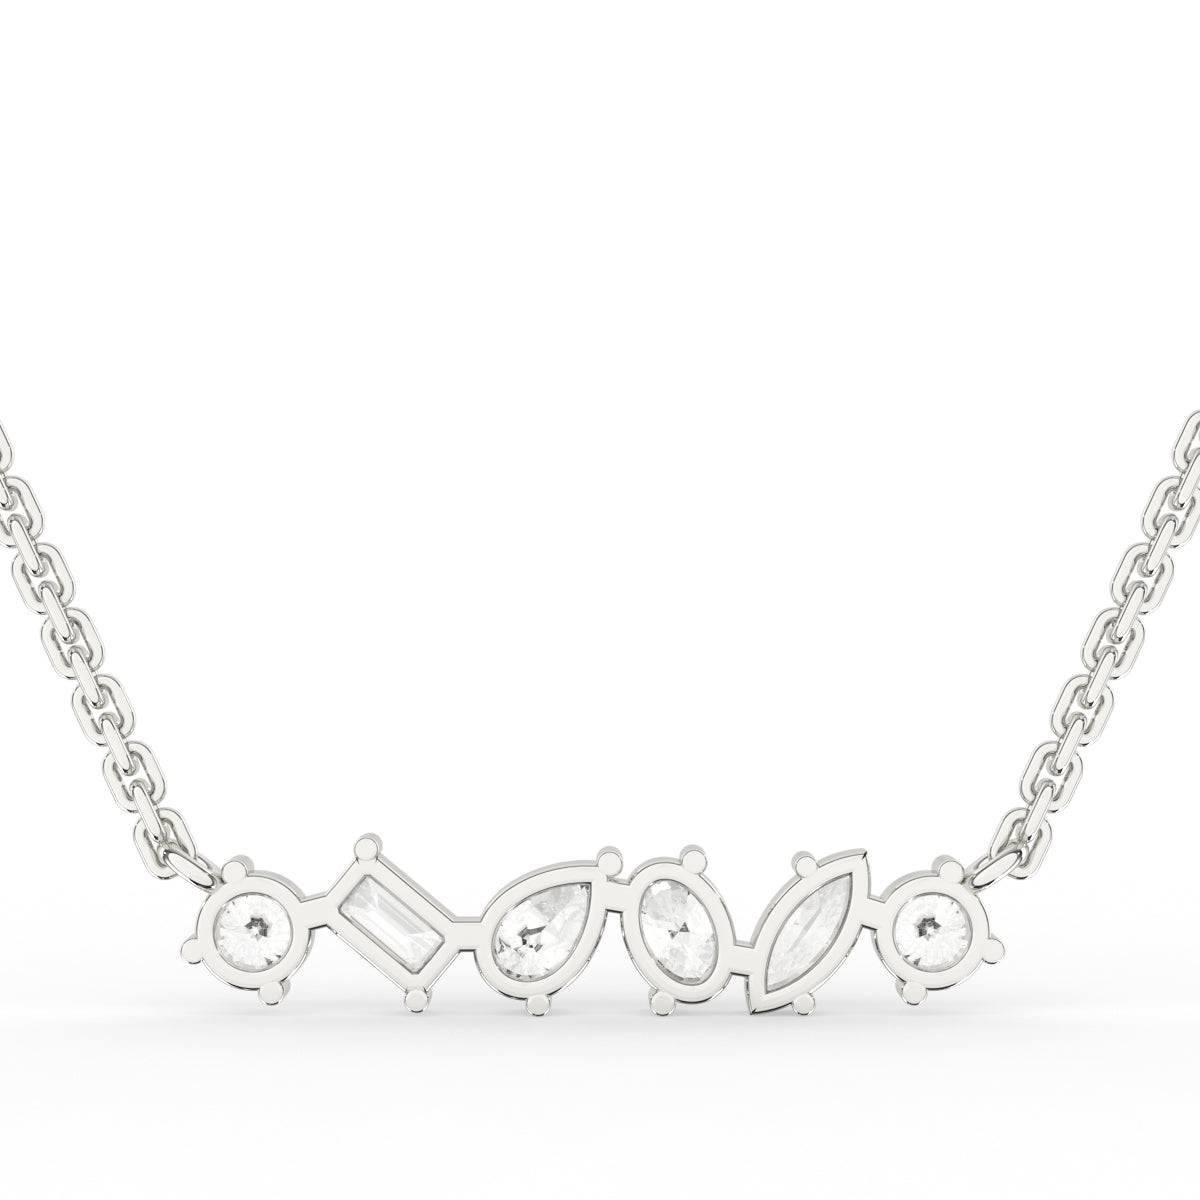 Fancy shape diamond pendant chain